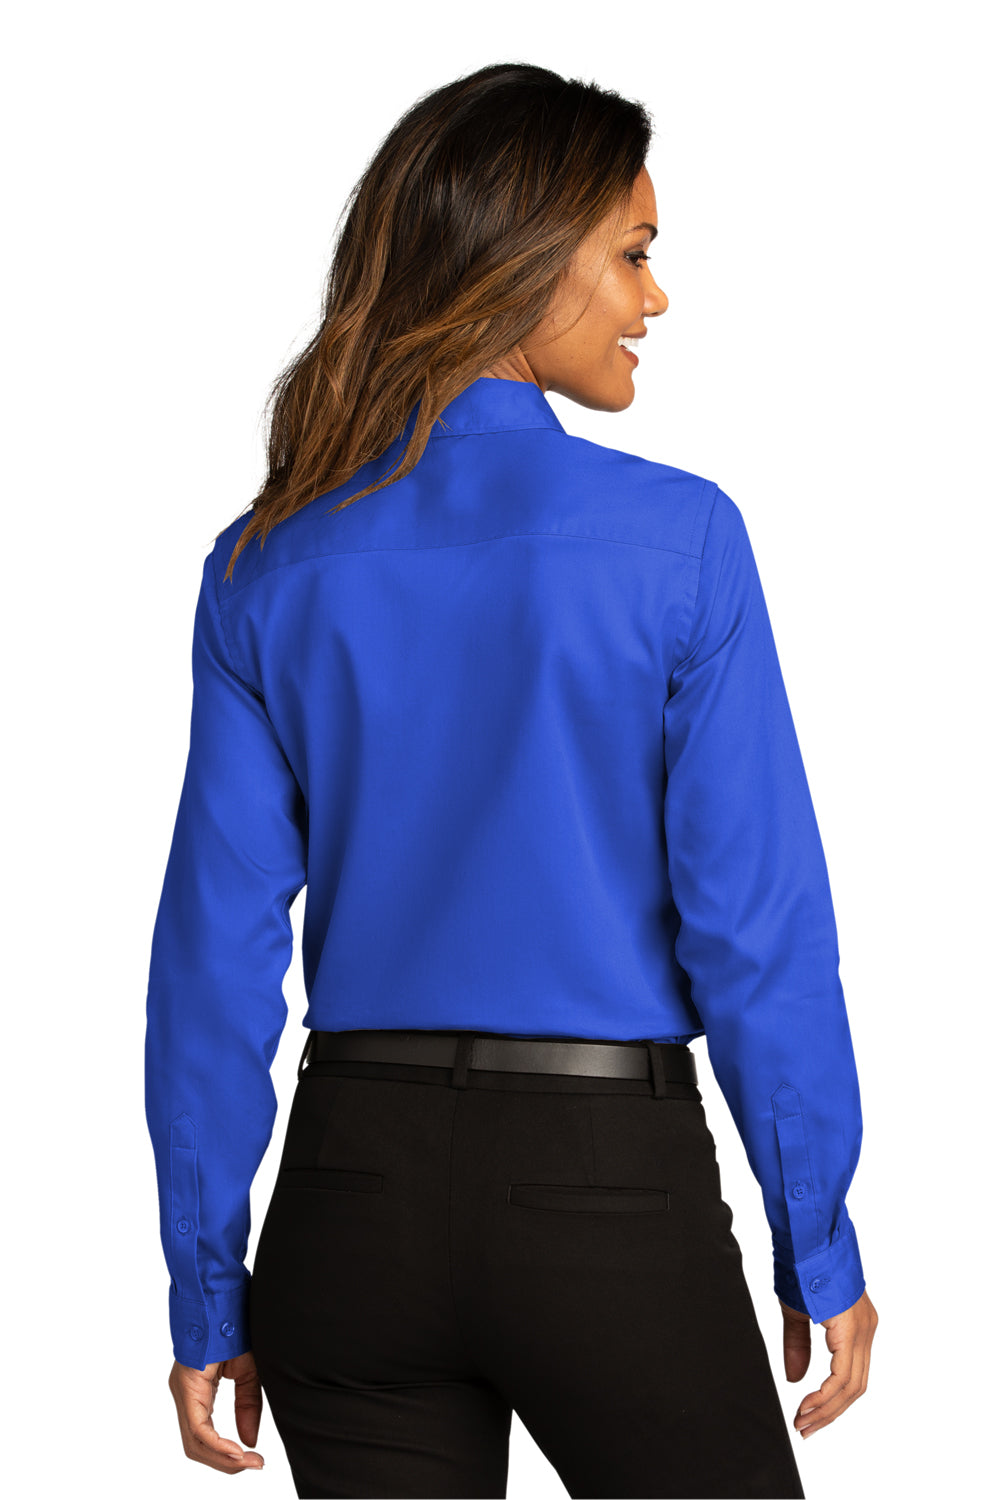 Port Authority Womens SuperPro React Long Sleeve Button Down Shirt True Royal Blue Side